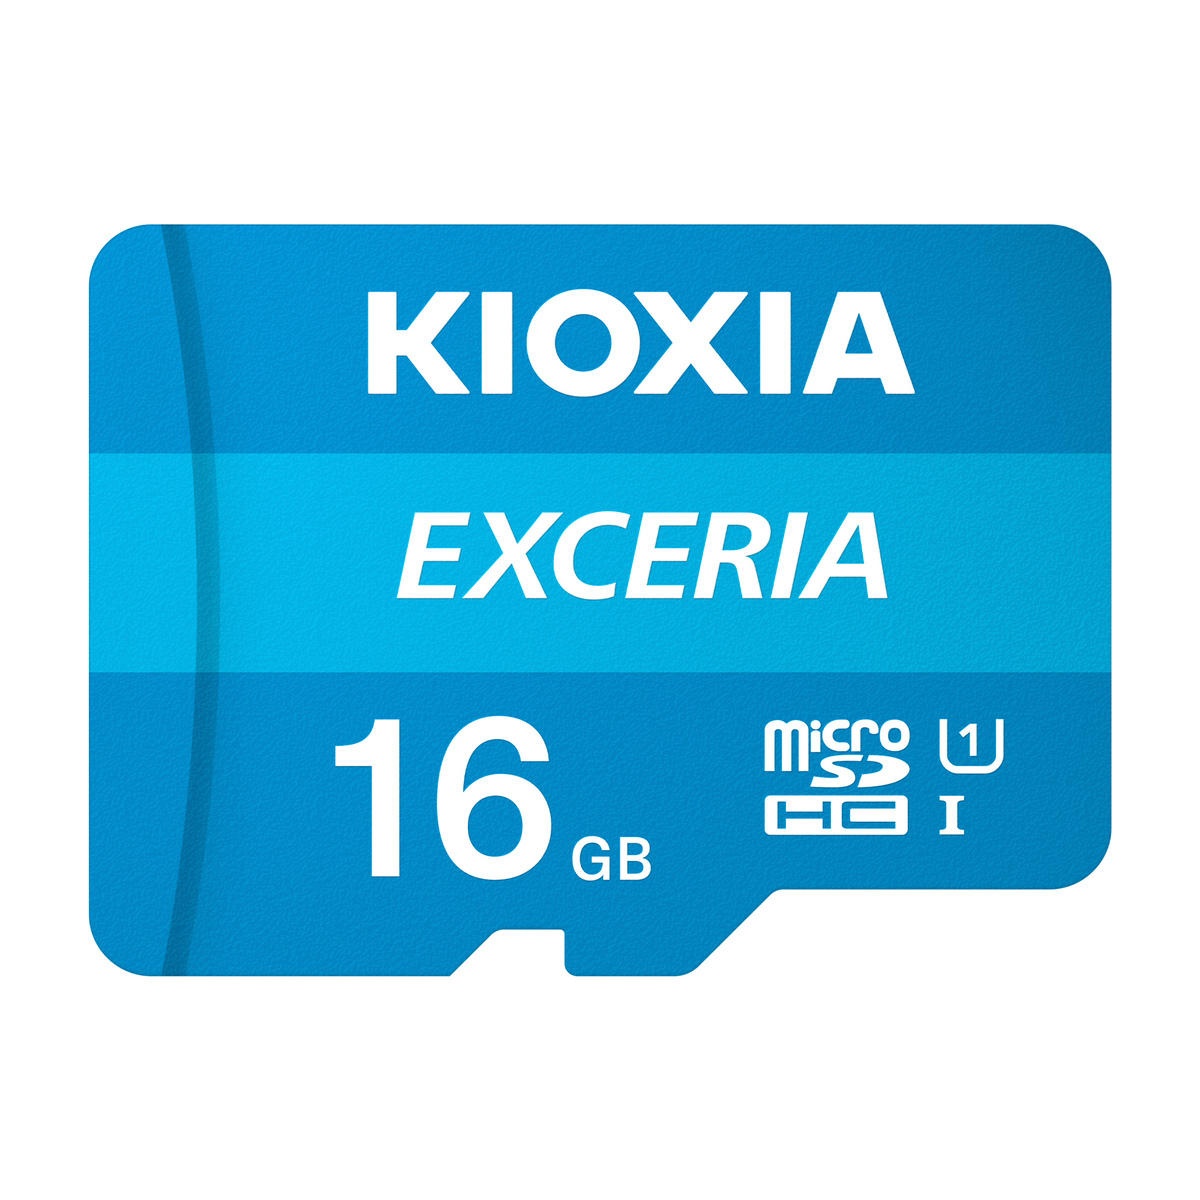 16GB microSD EXCERIA